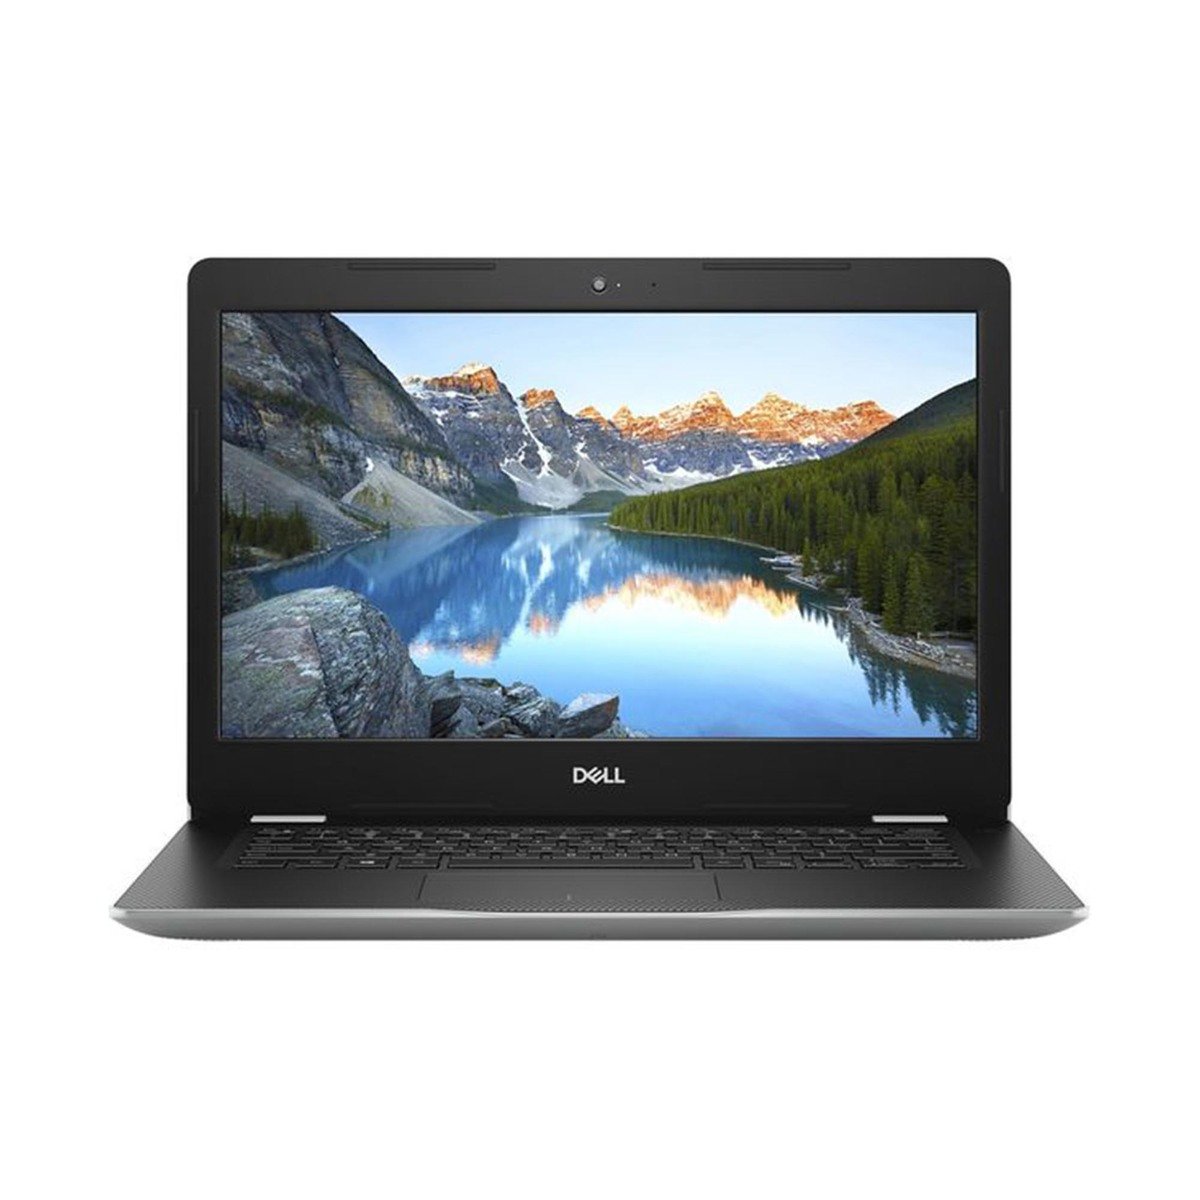 Dell Notebook 3482-INS-1405, Intel Celeron N4000,4GB RAM, 64GB SSD, Intel HD Graphics, 14"HD LED Display, Windows 10, Silver